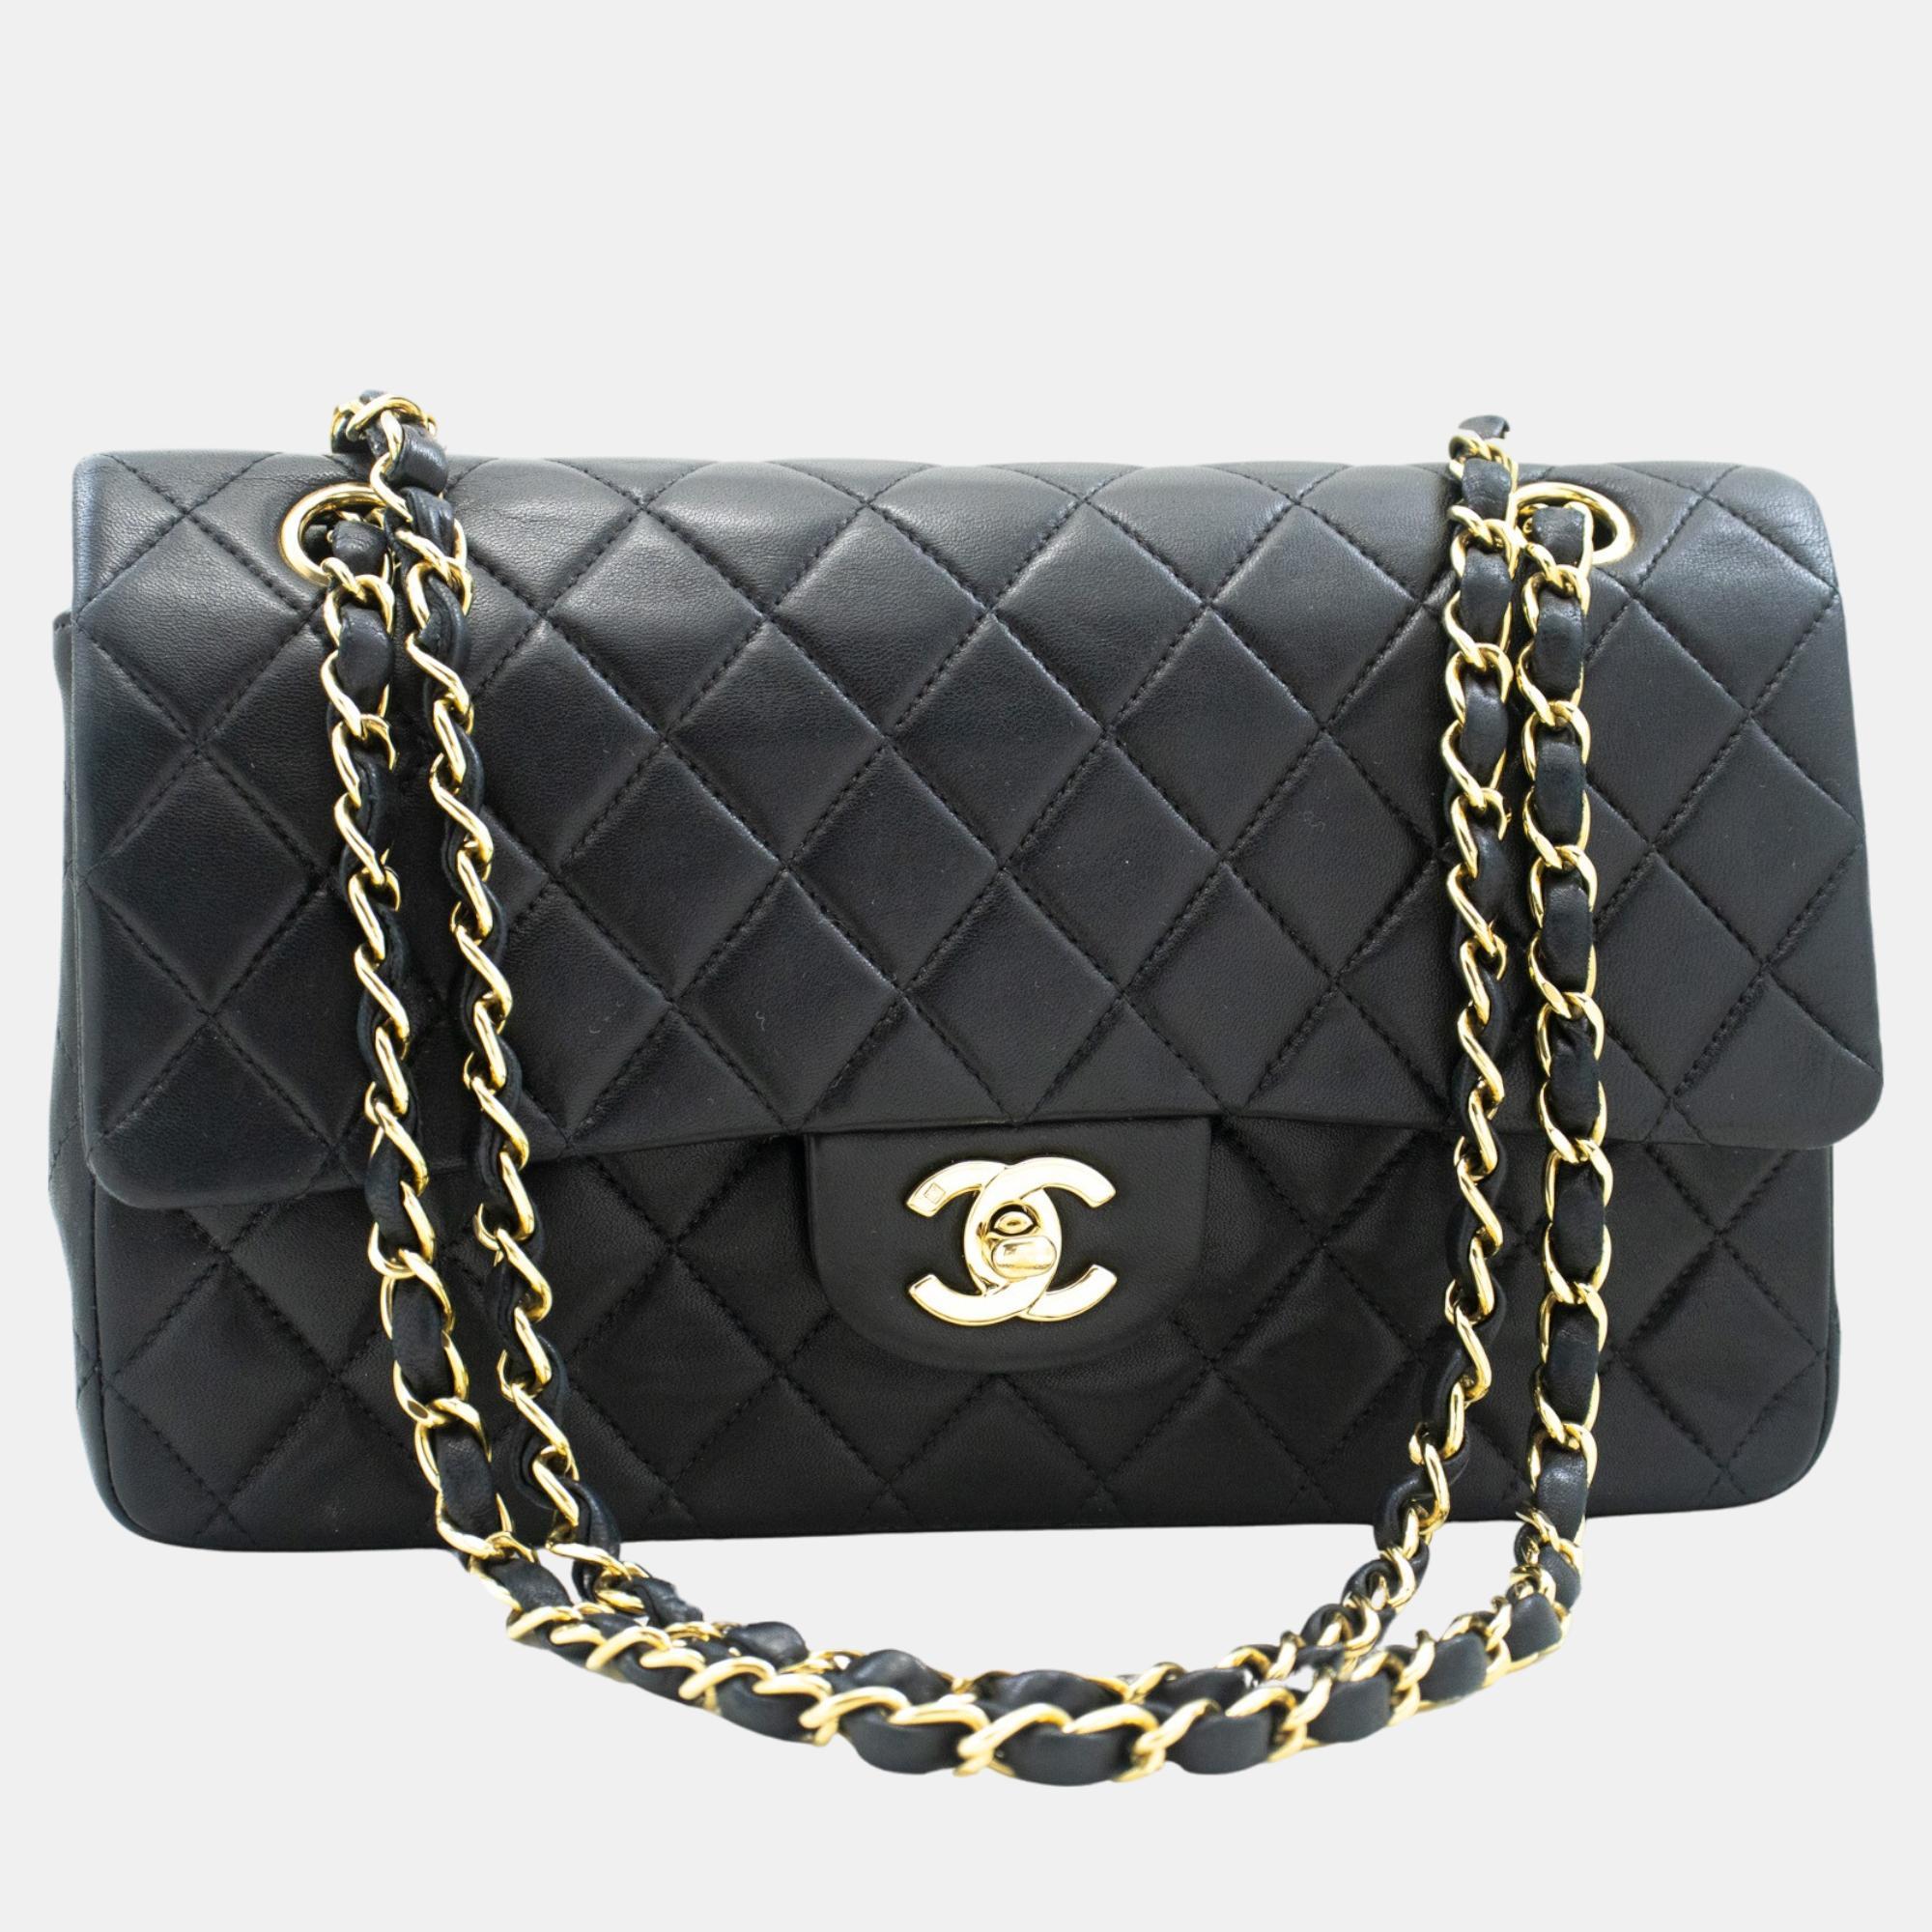 Chanel black lambskin leather medium classic double flap shoulder bag